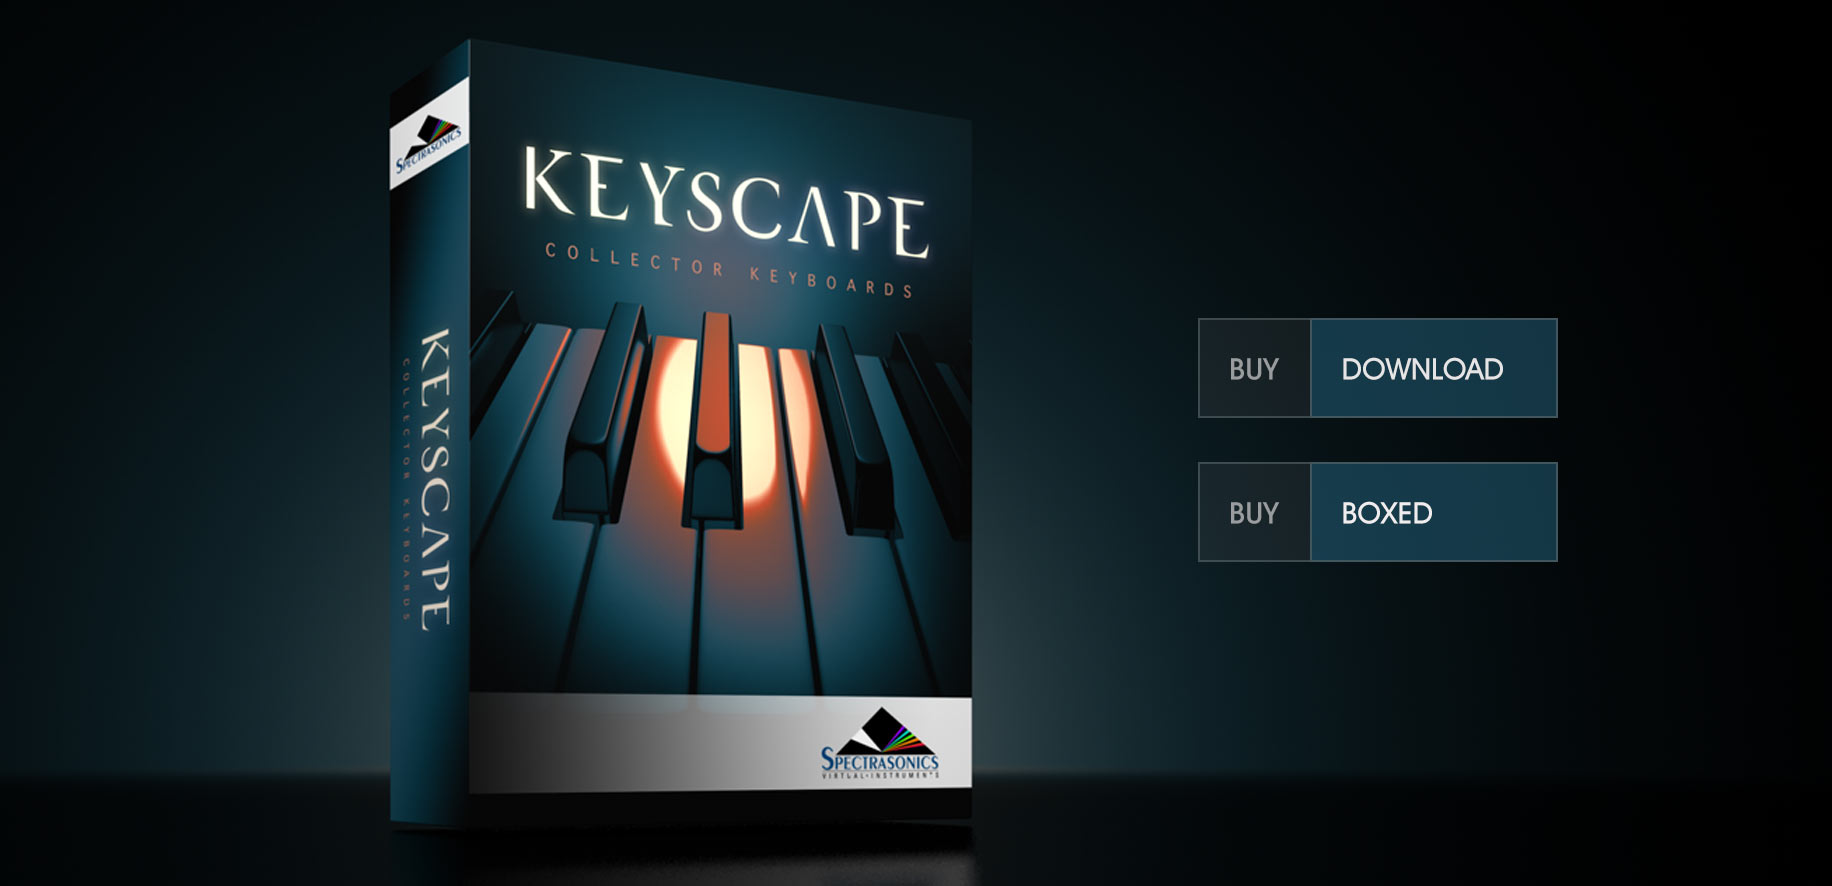 Spectrasonics Keyscape Software Update v1.1.0f (macOS)